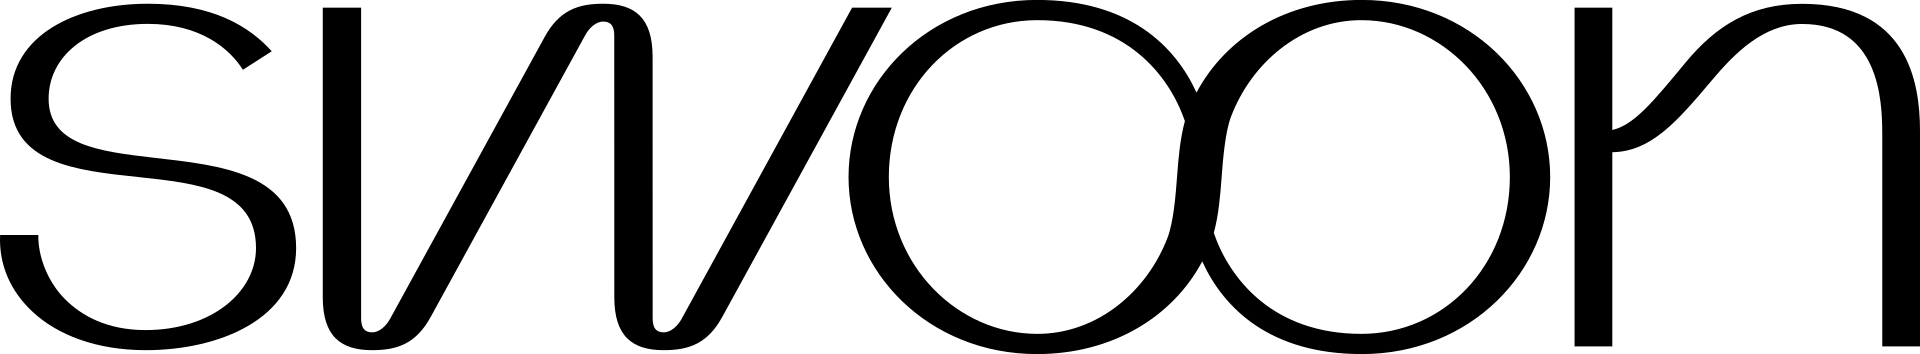 Swoon-logo